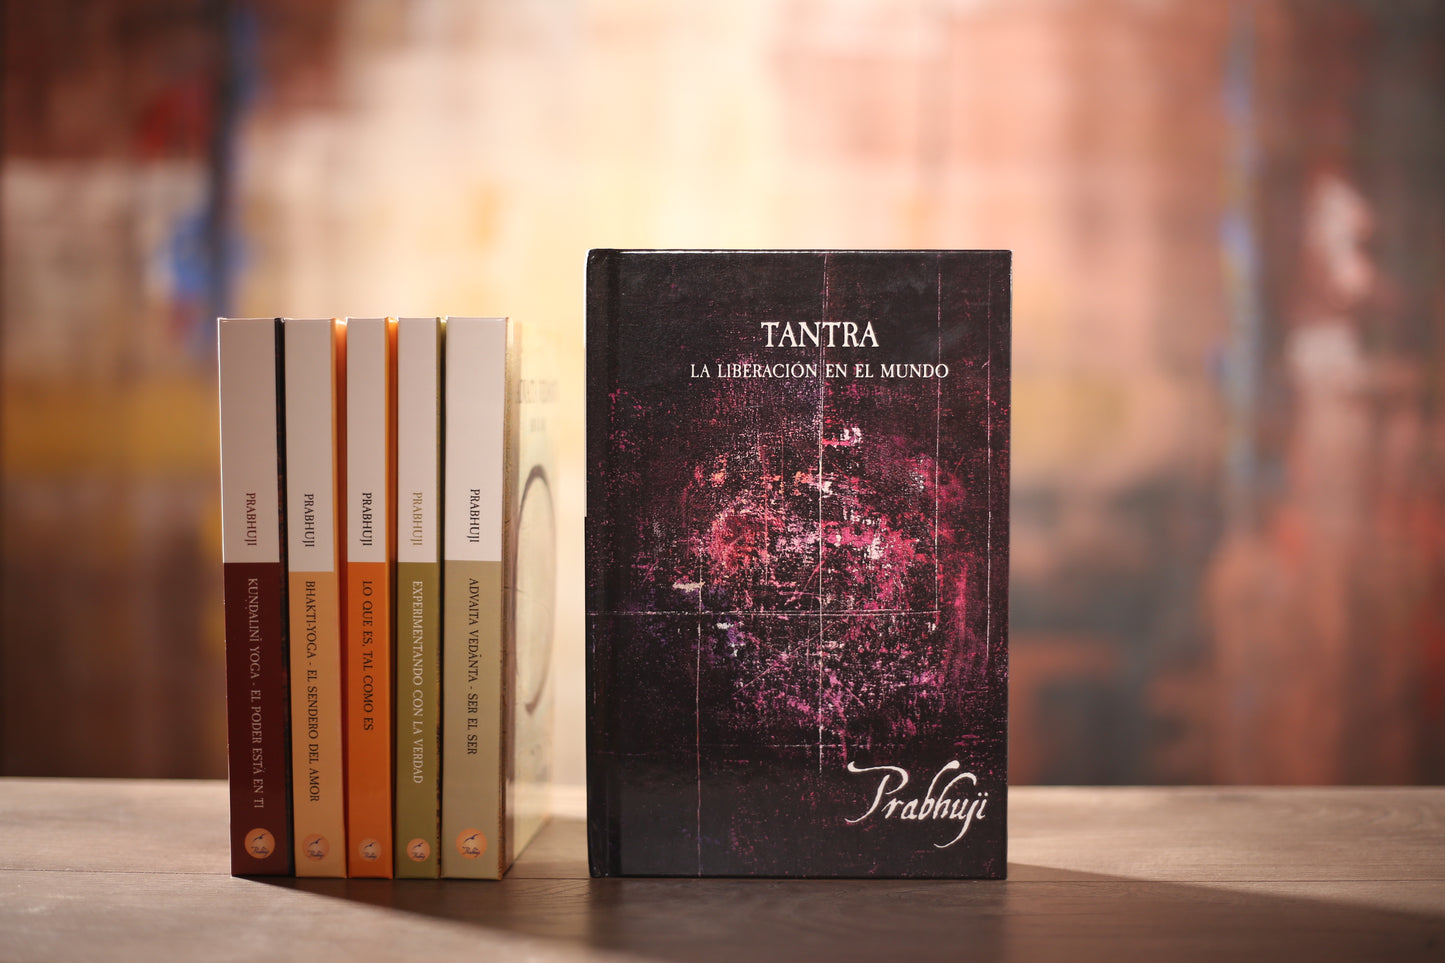 Book Tantra - La liberacion en el mundo con Prabhuji (Hard cover - Spanish)